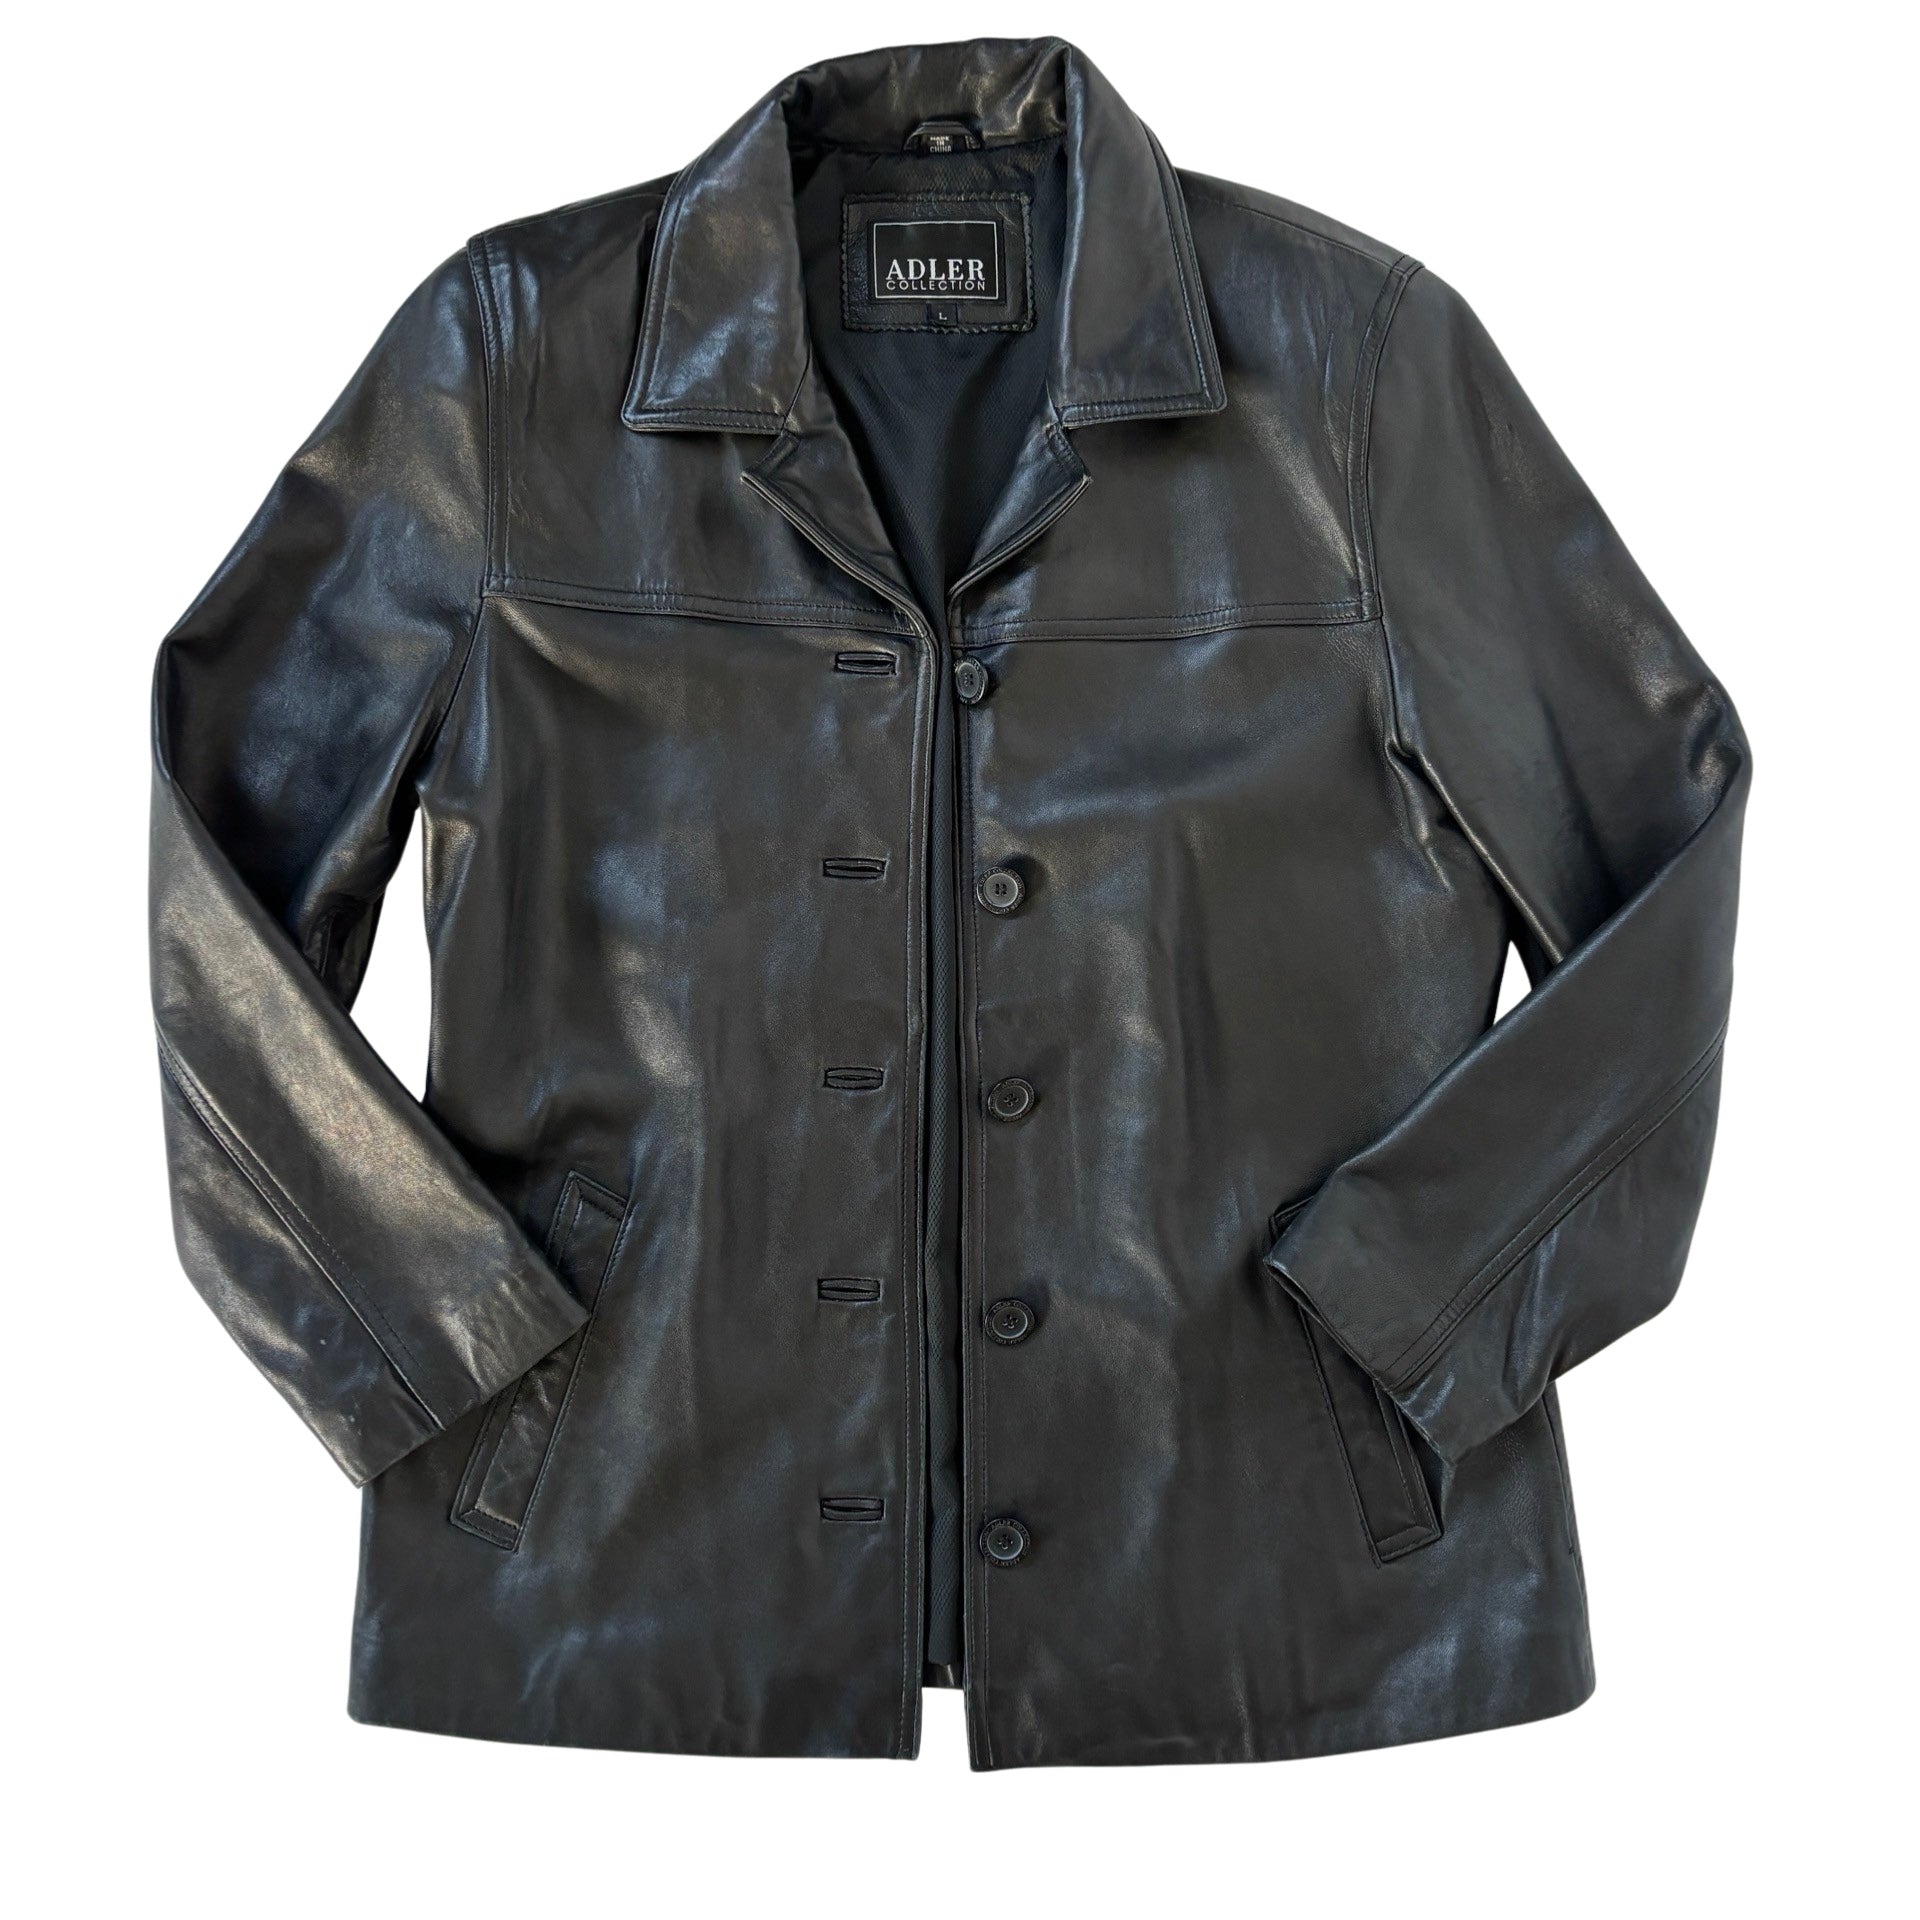 90s Leather Jacket (L)